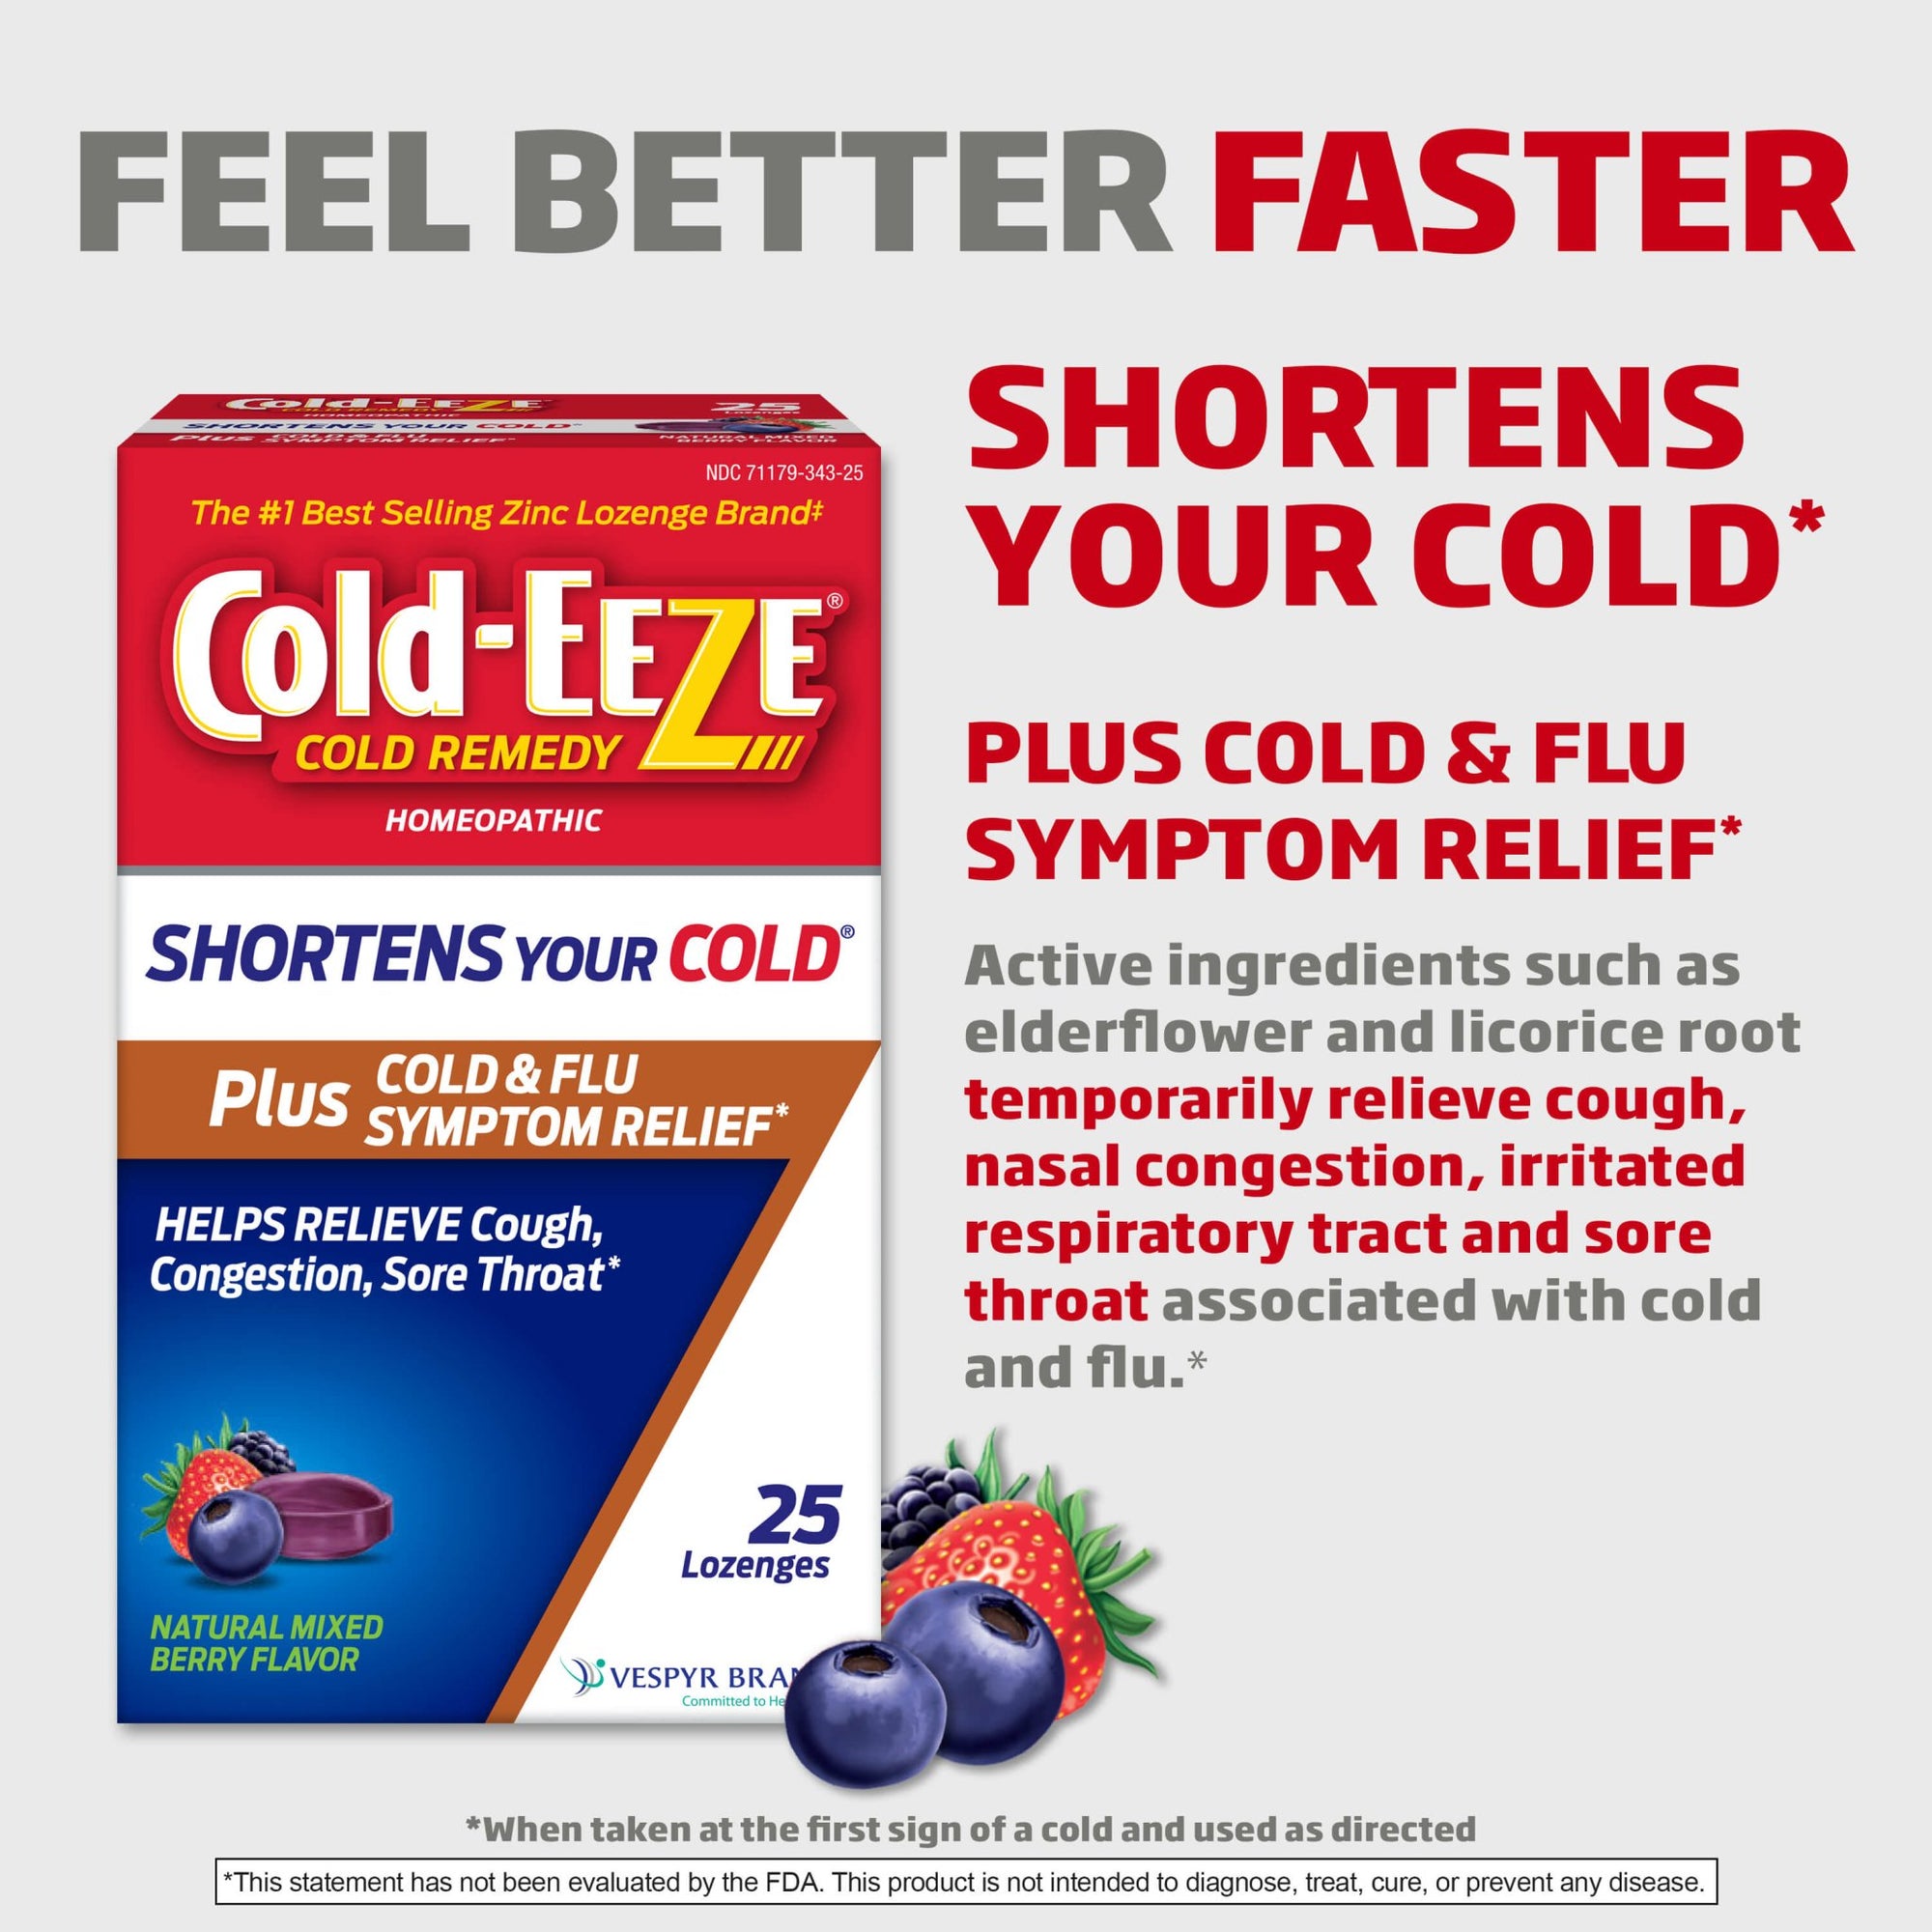 Plus Cold & Flu Symptom Relief Lozenges - Cold-EEZE